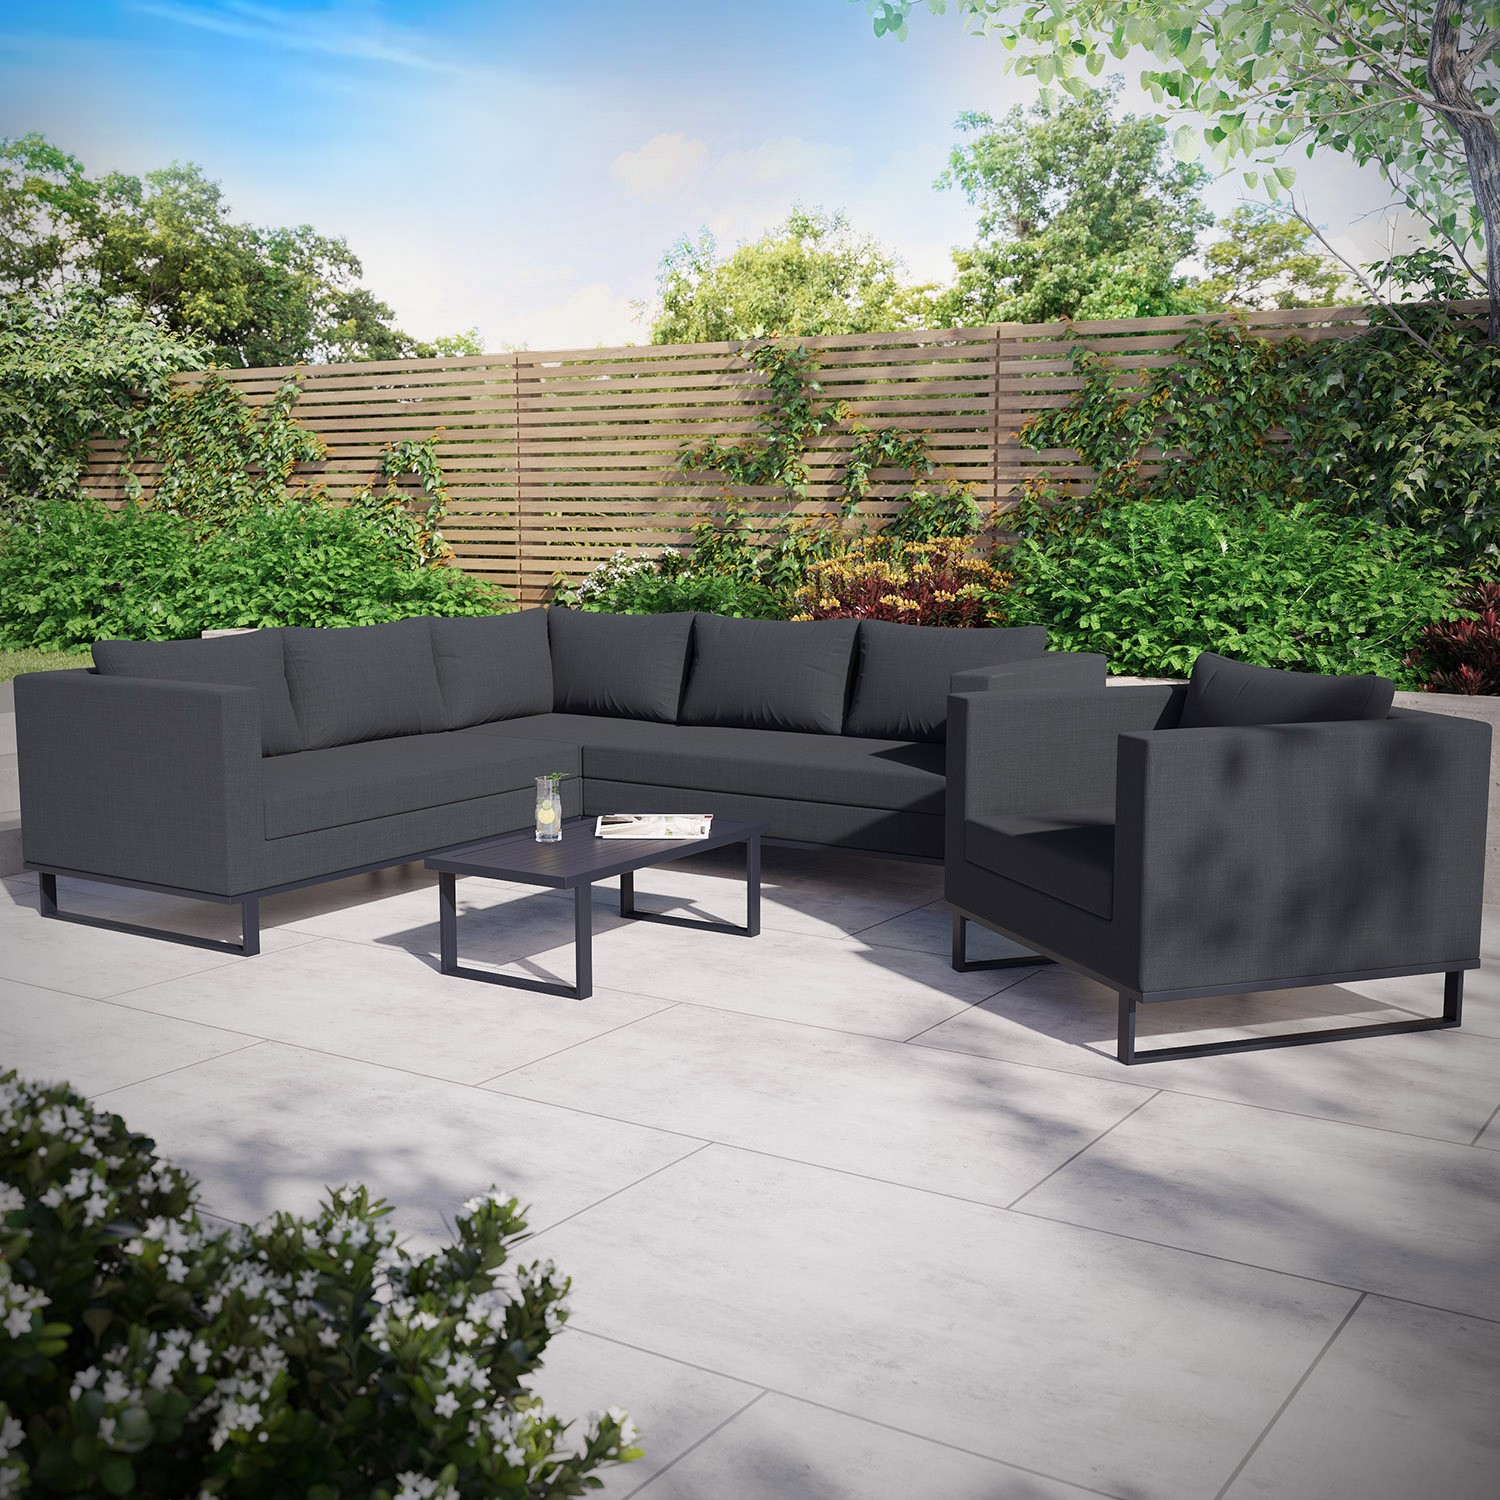 Photo of 5 seater grey outdoor garden waterproof fabric corner sofa chair and table set - como